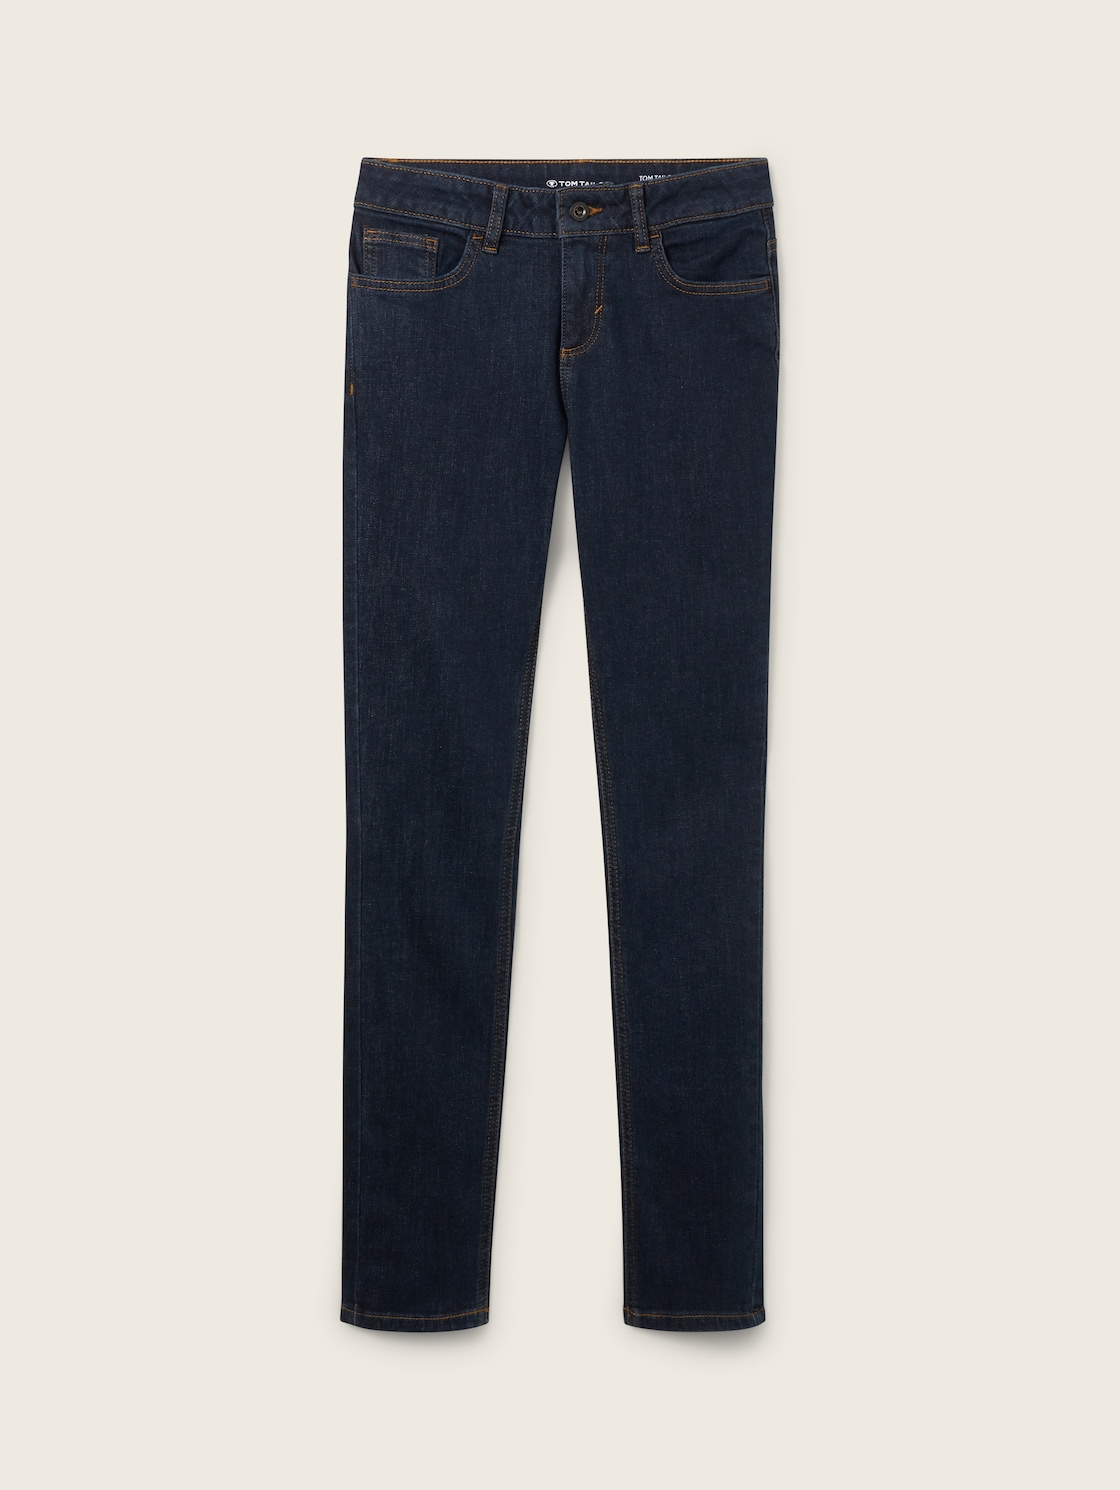 TOM TAILOR Damen Alexa Slim Jeans, blau, Uni, Gr. 31/32 von Tom Tailor